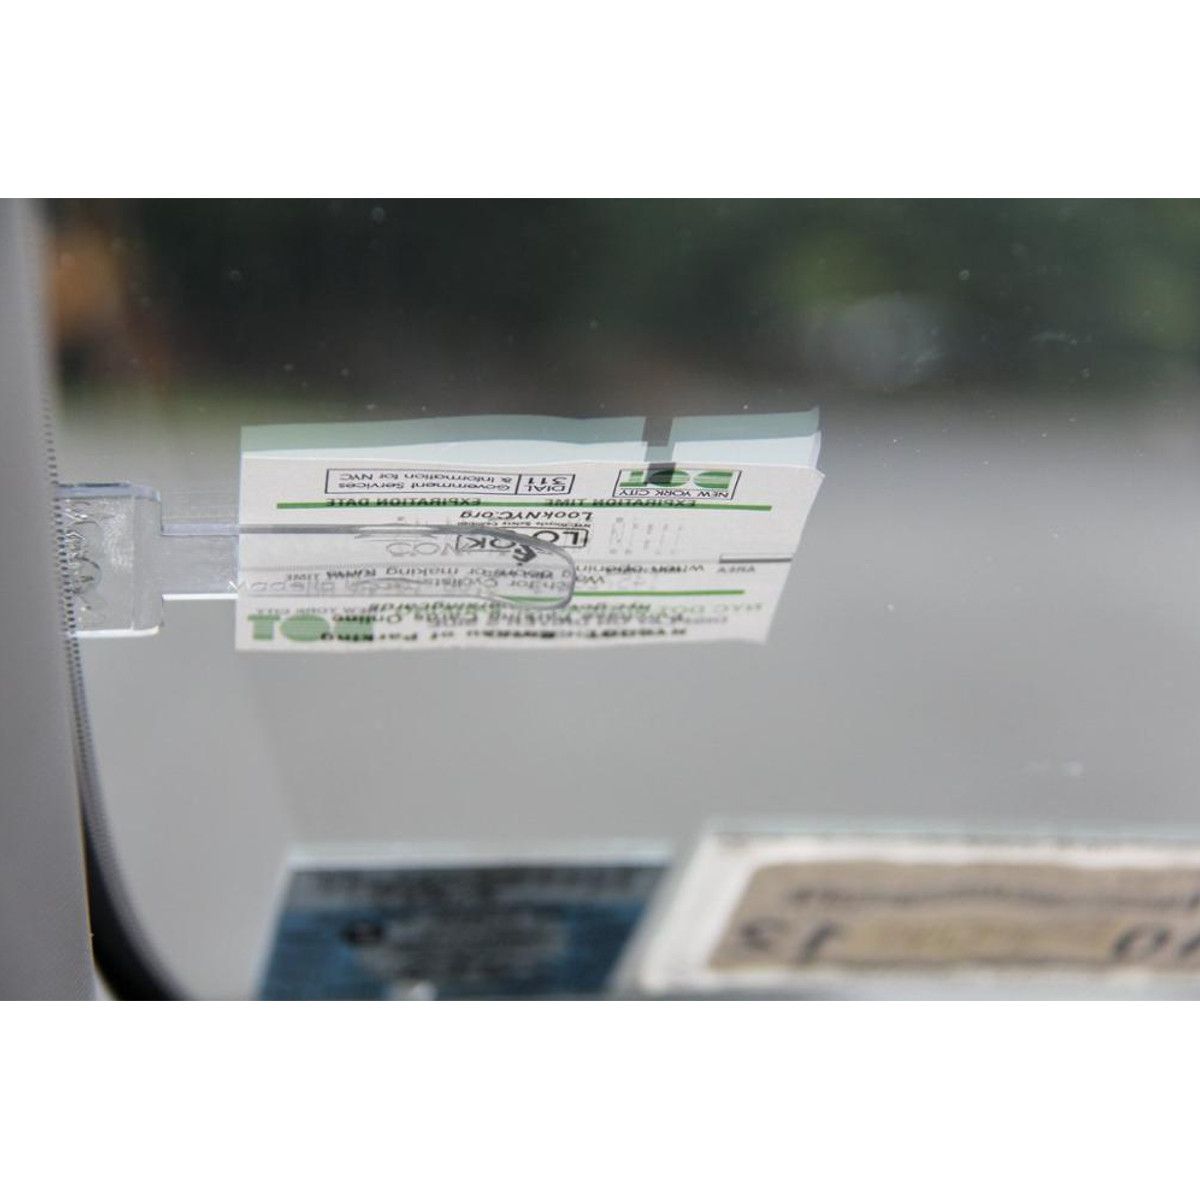 2Pcs-Vehicle-Parking-Ticket-Permit-Holder-Clip-Sticker-Windscreen-Window-Binder-Clips-1299666